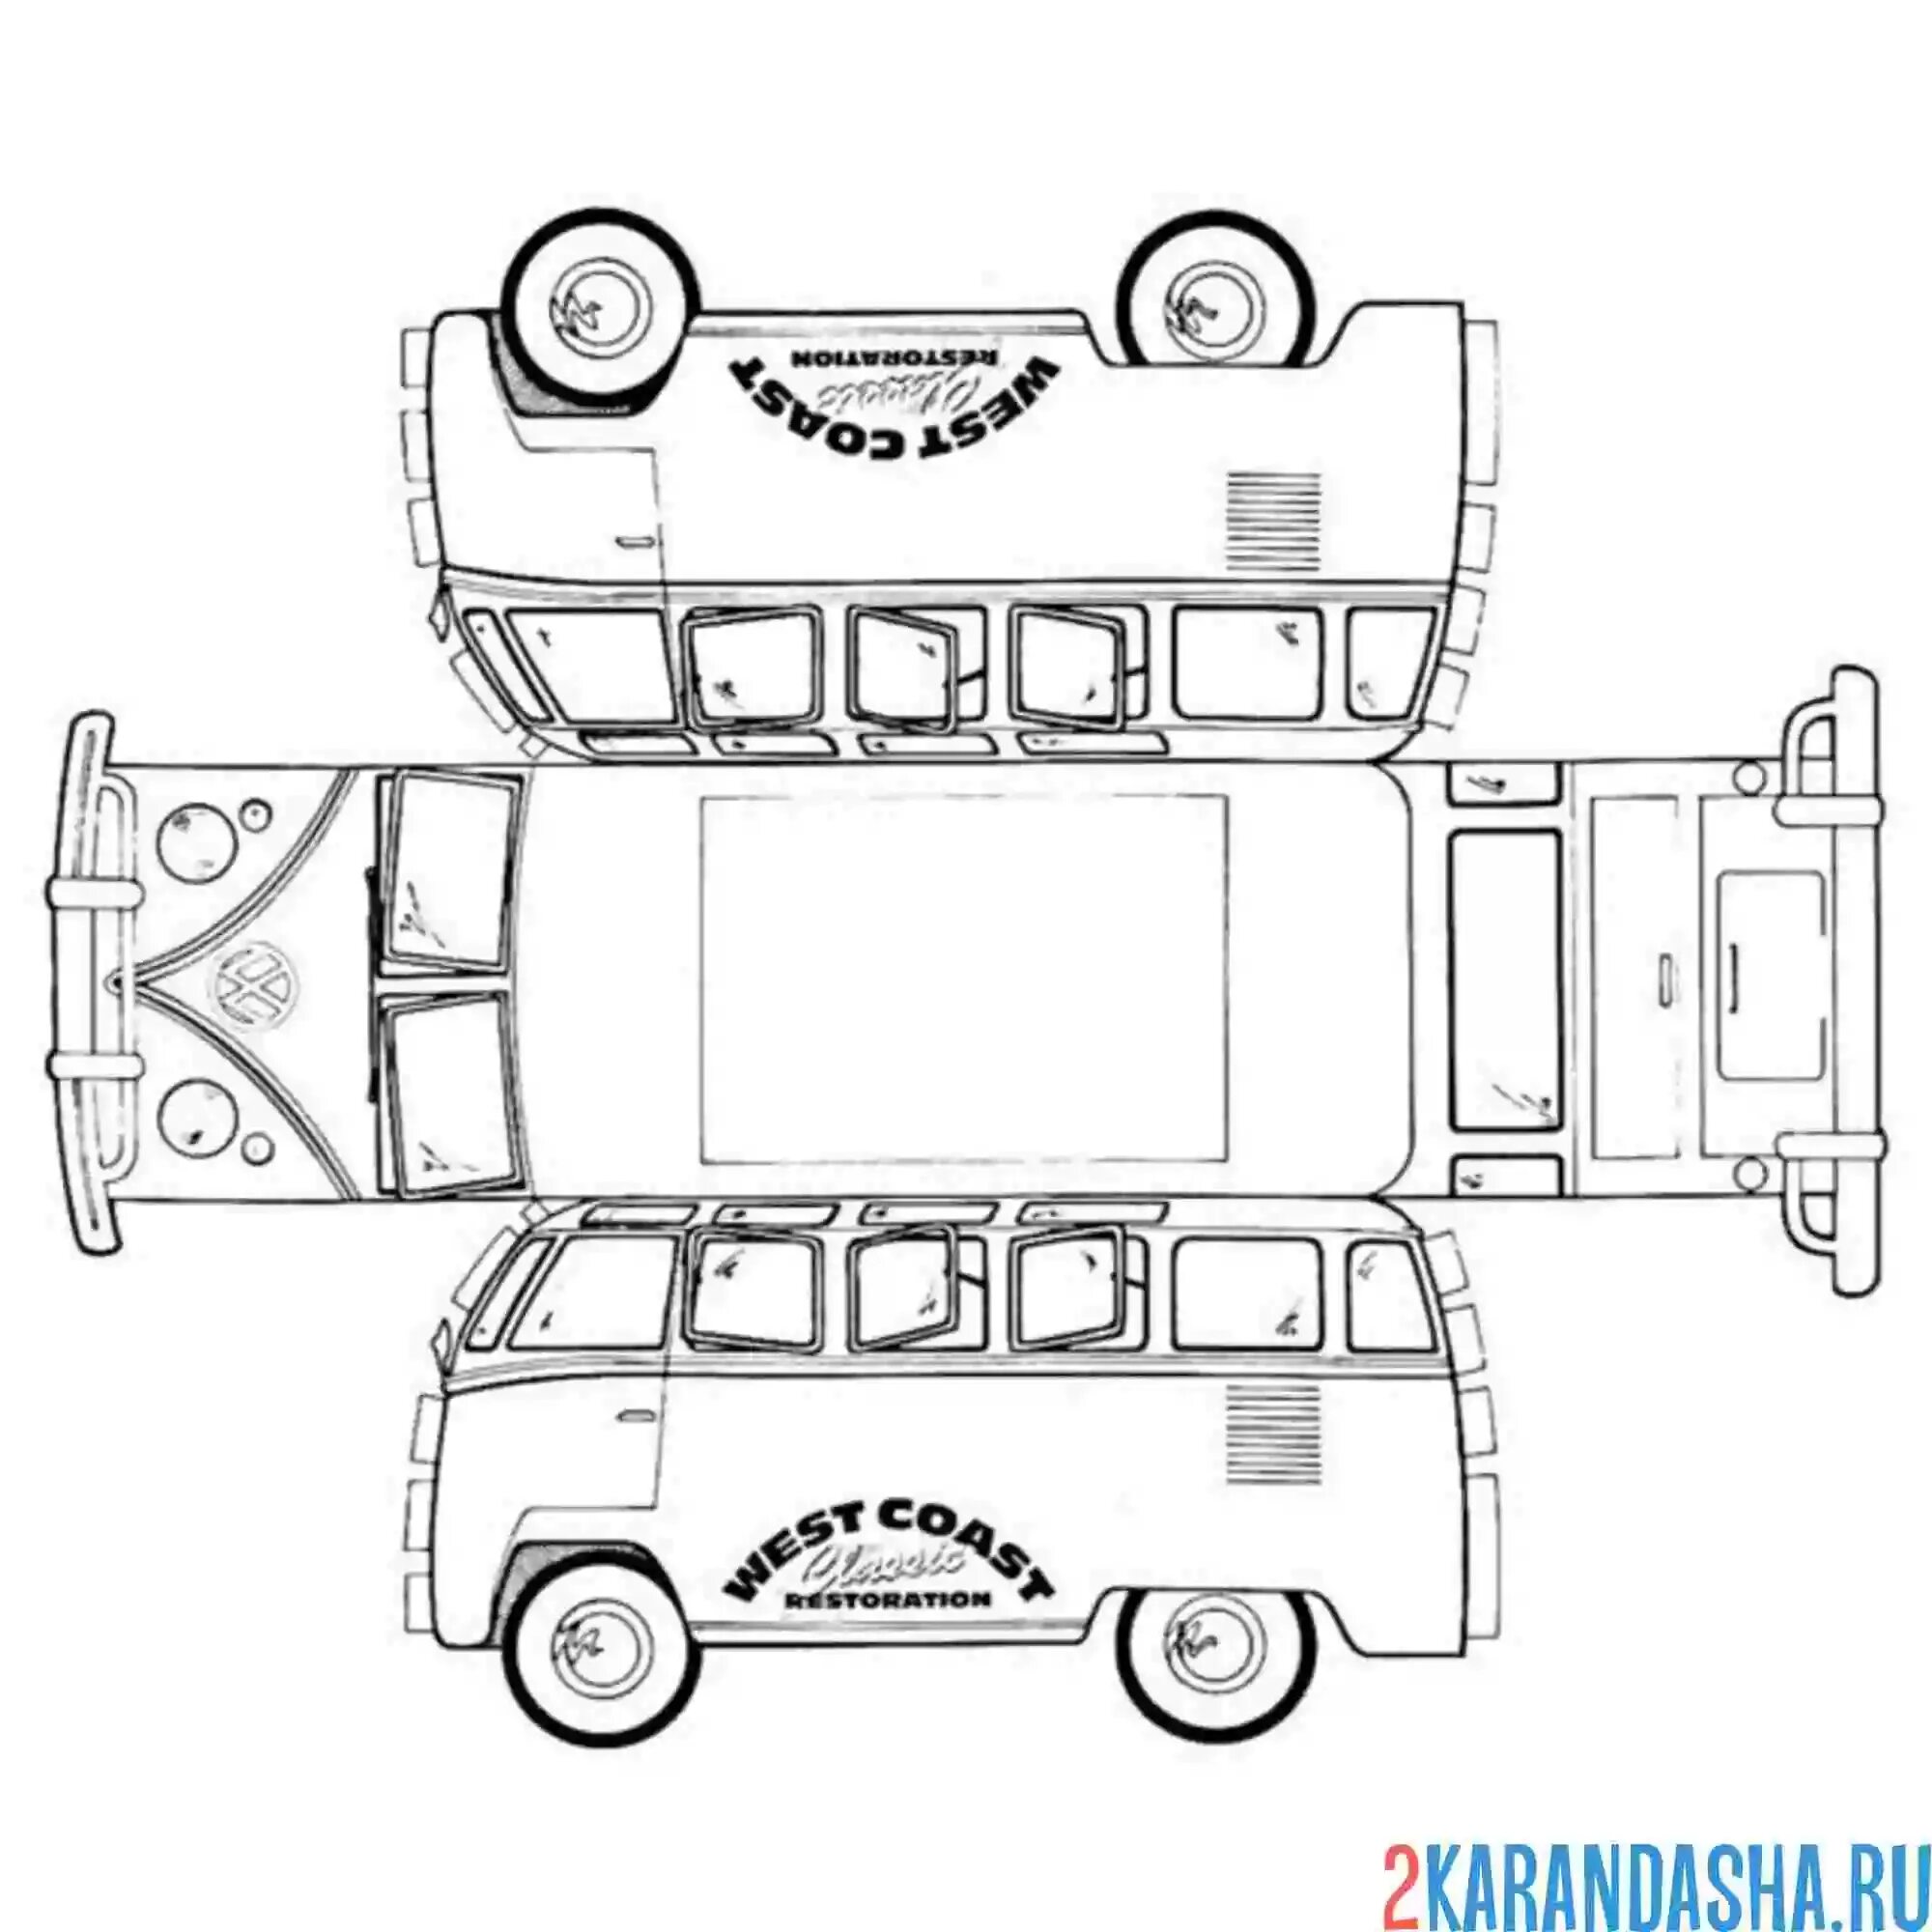 ЛИАЗ 677 развертка. Макет грузовика спереди Мерседес. РАФ 2203 развертка. Volkswagen Transporter развертка.